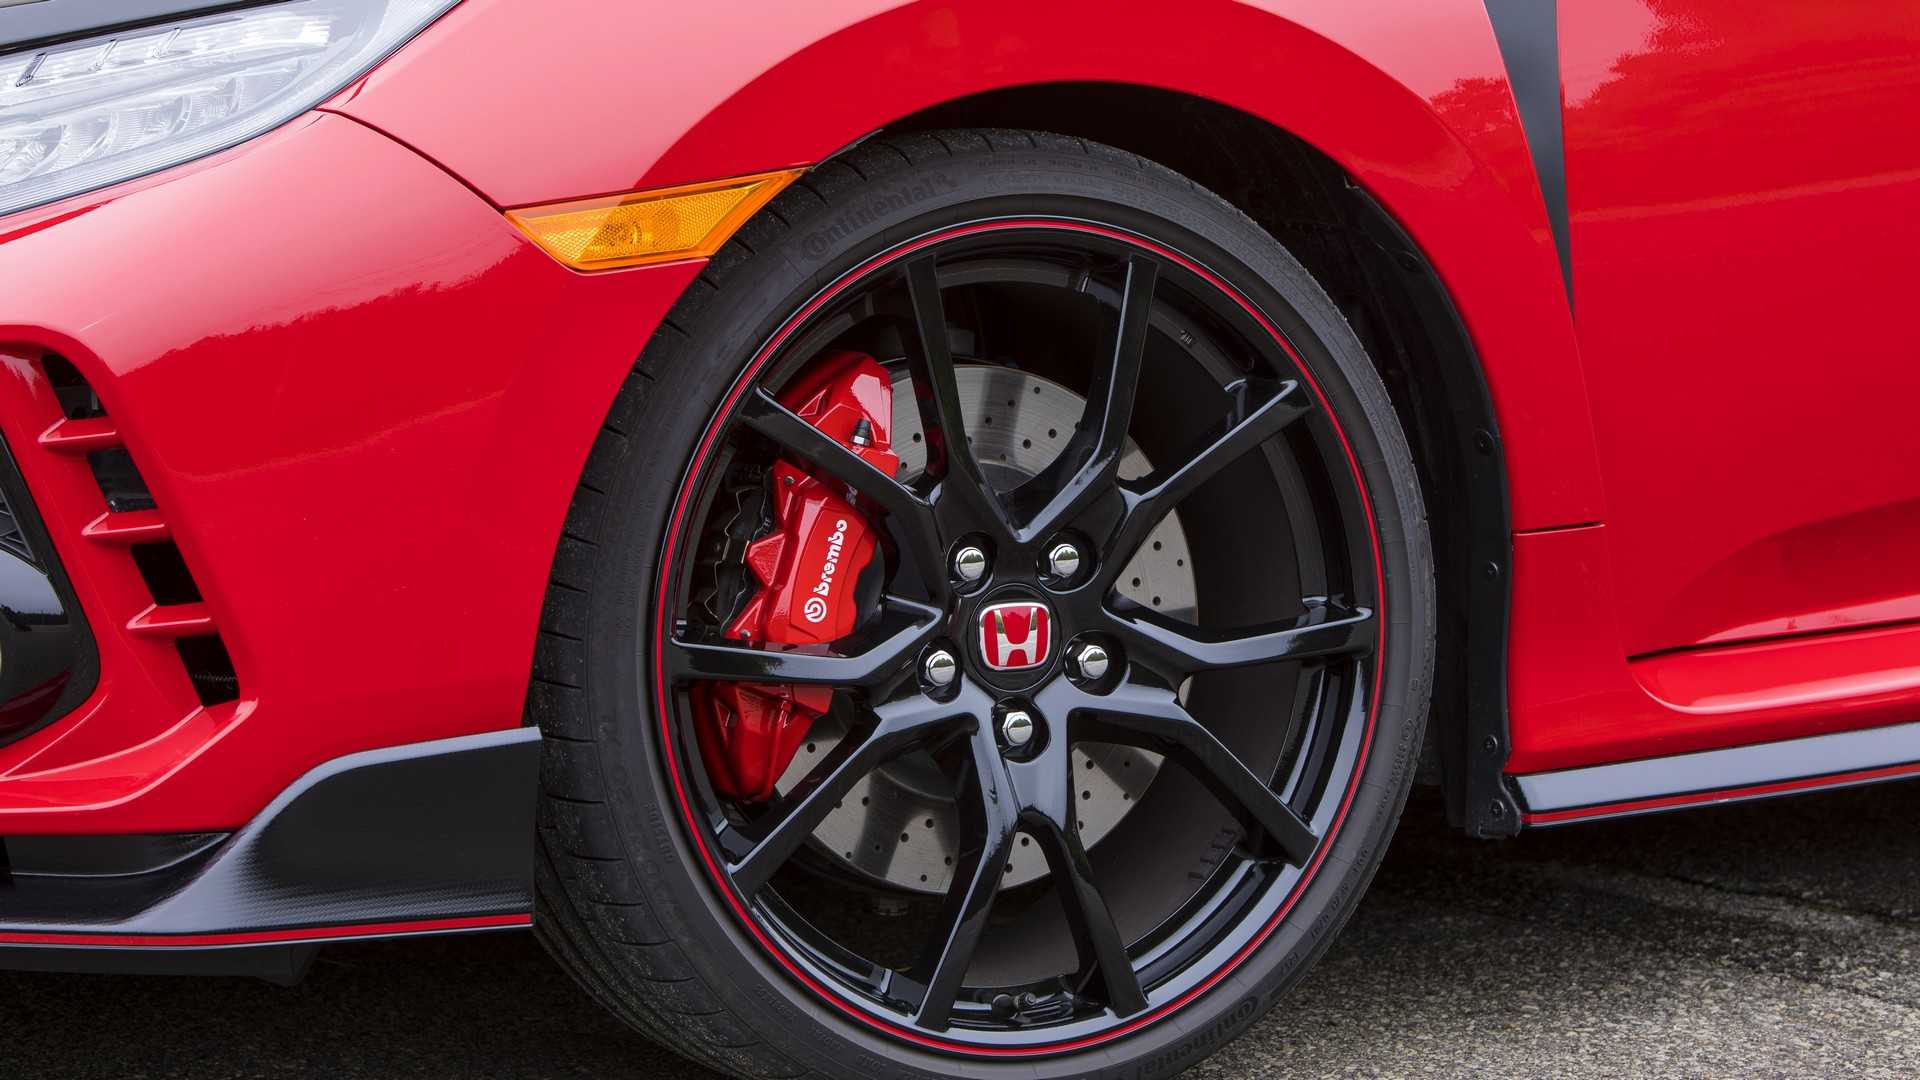 2019 Honda Civic Type R (Color: Rallye Red) Brakes Wallpapers #61 of 182